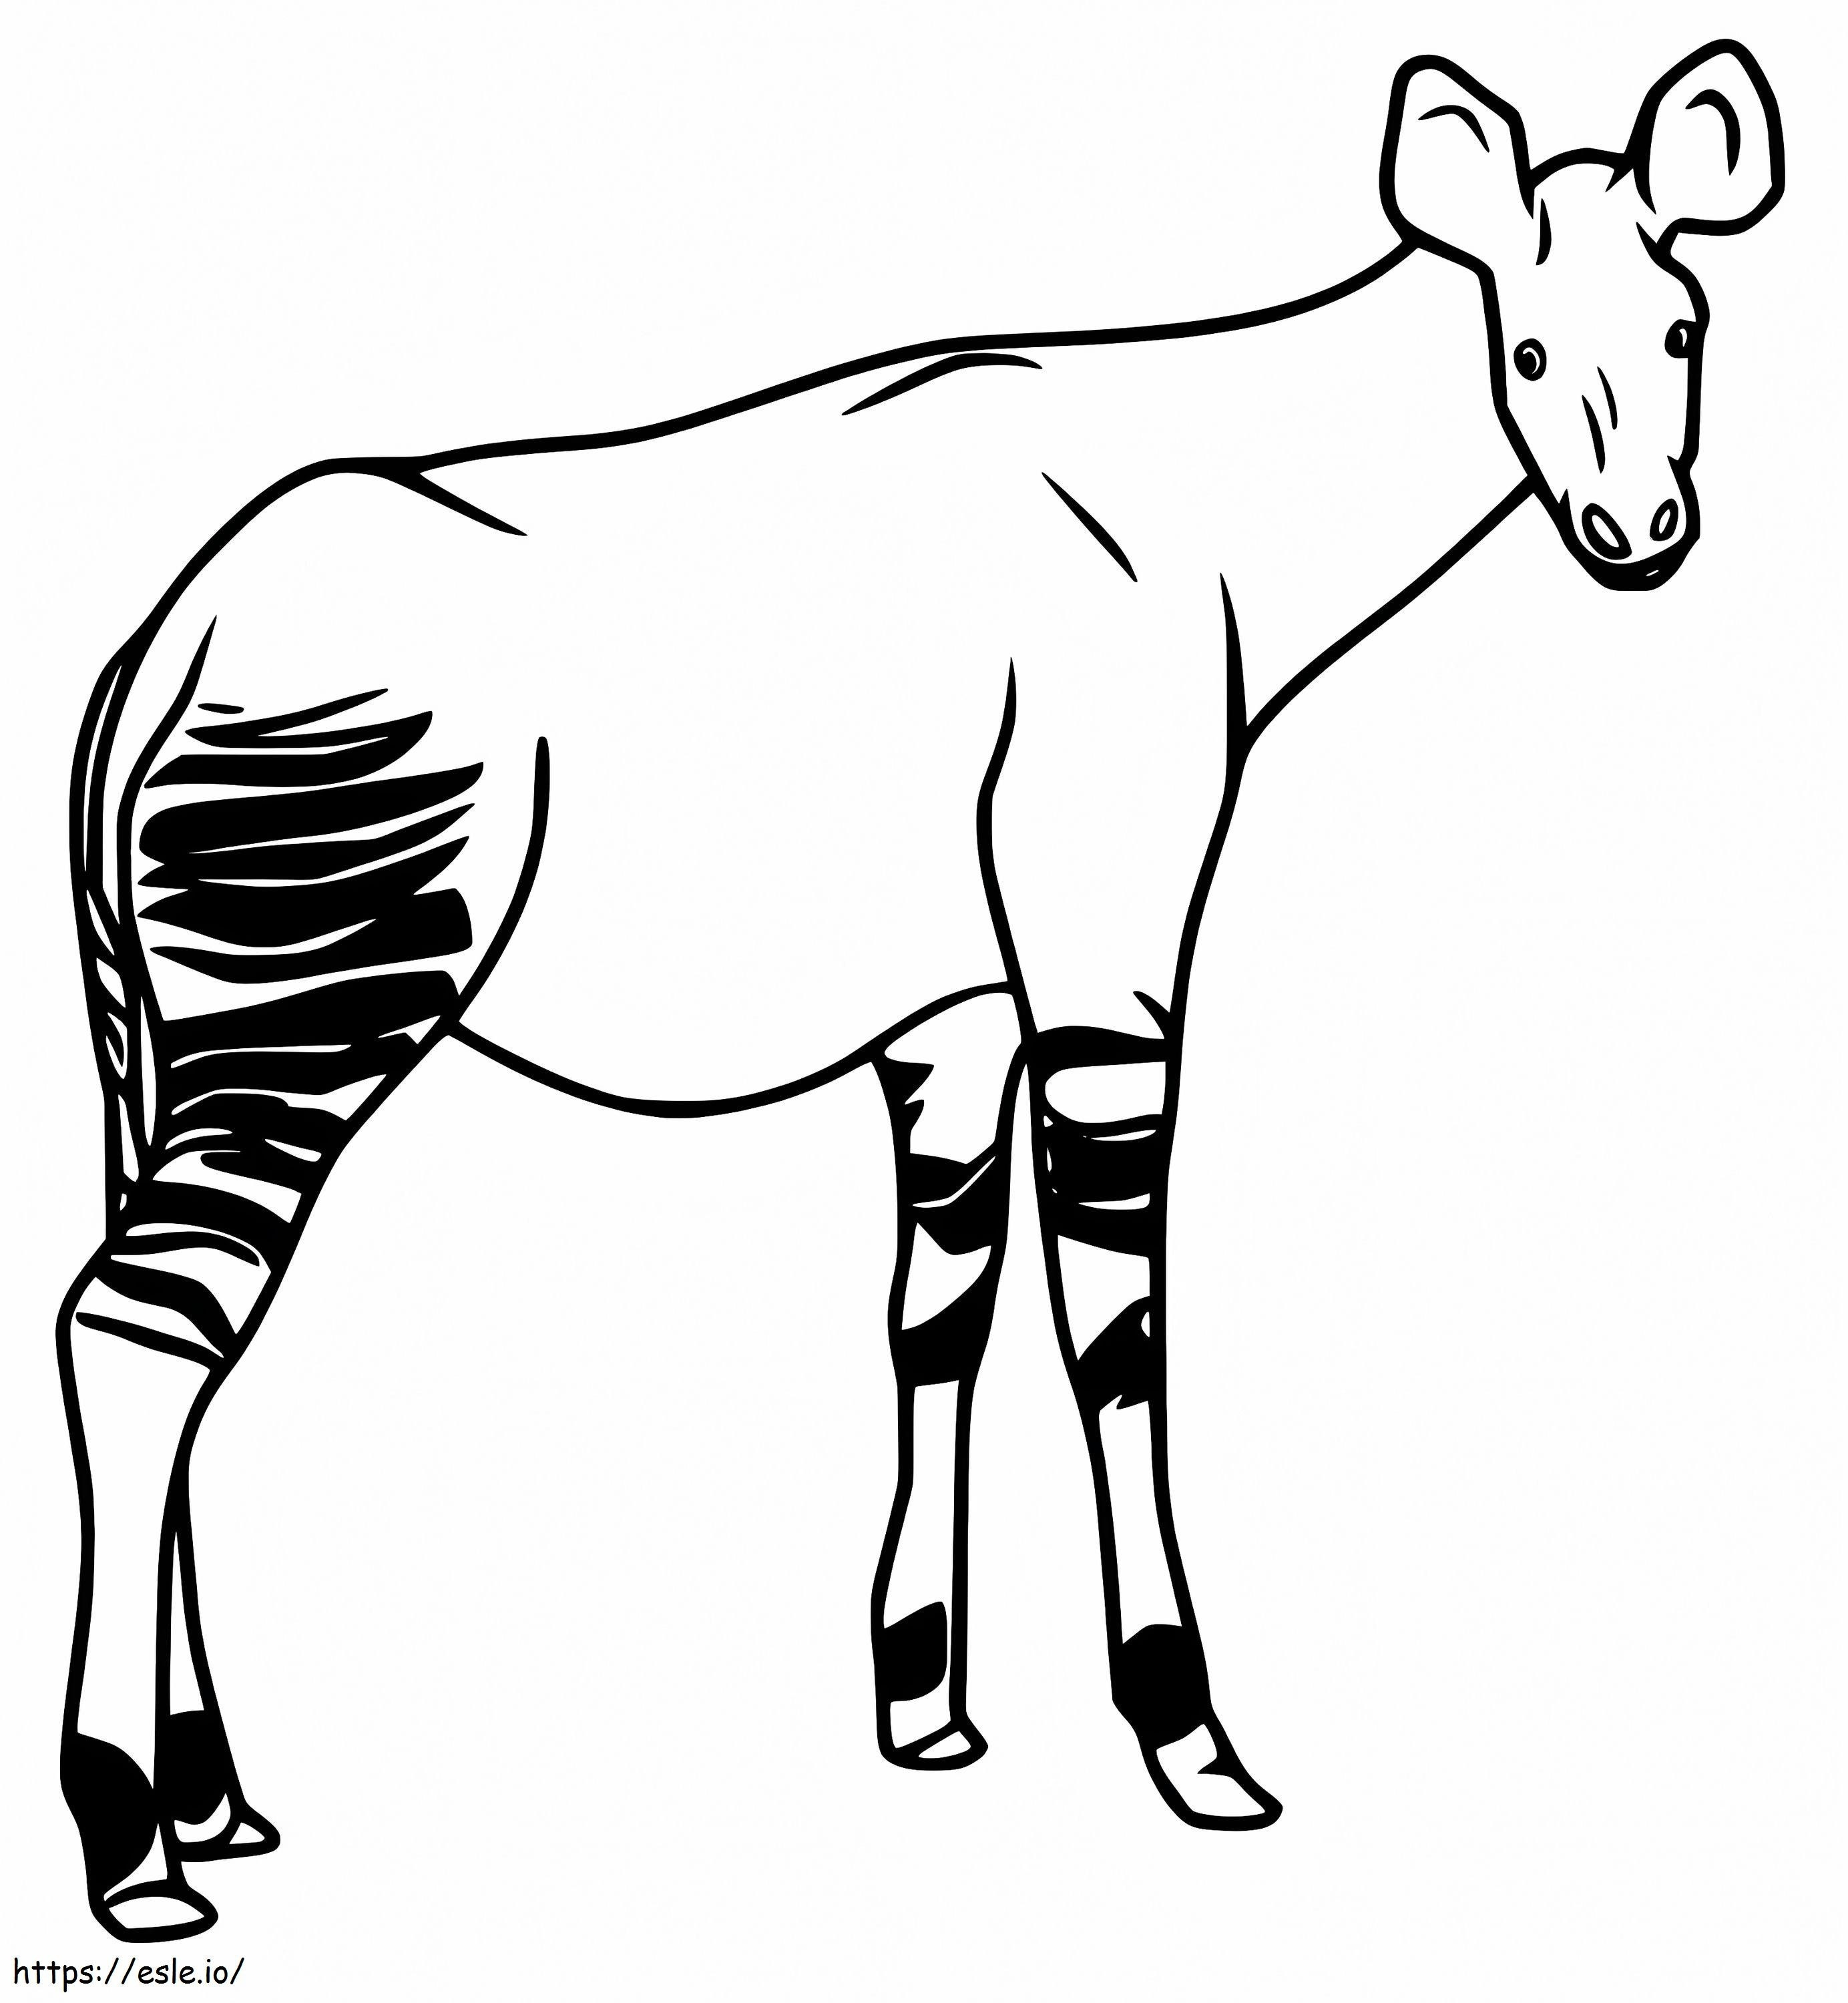 Einfach Okapi ausmalbilder